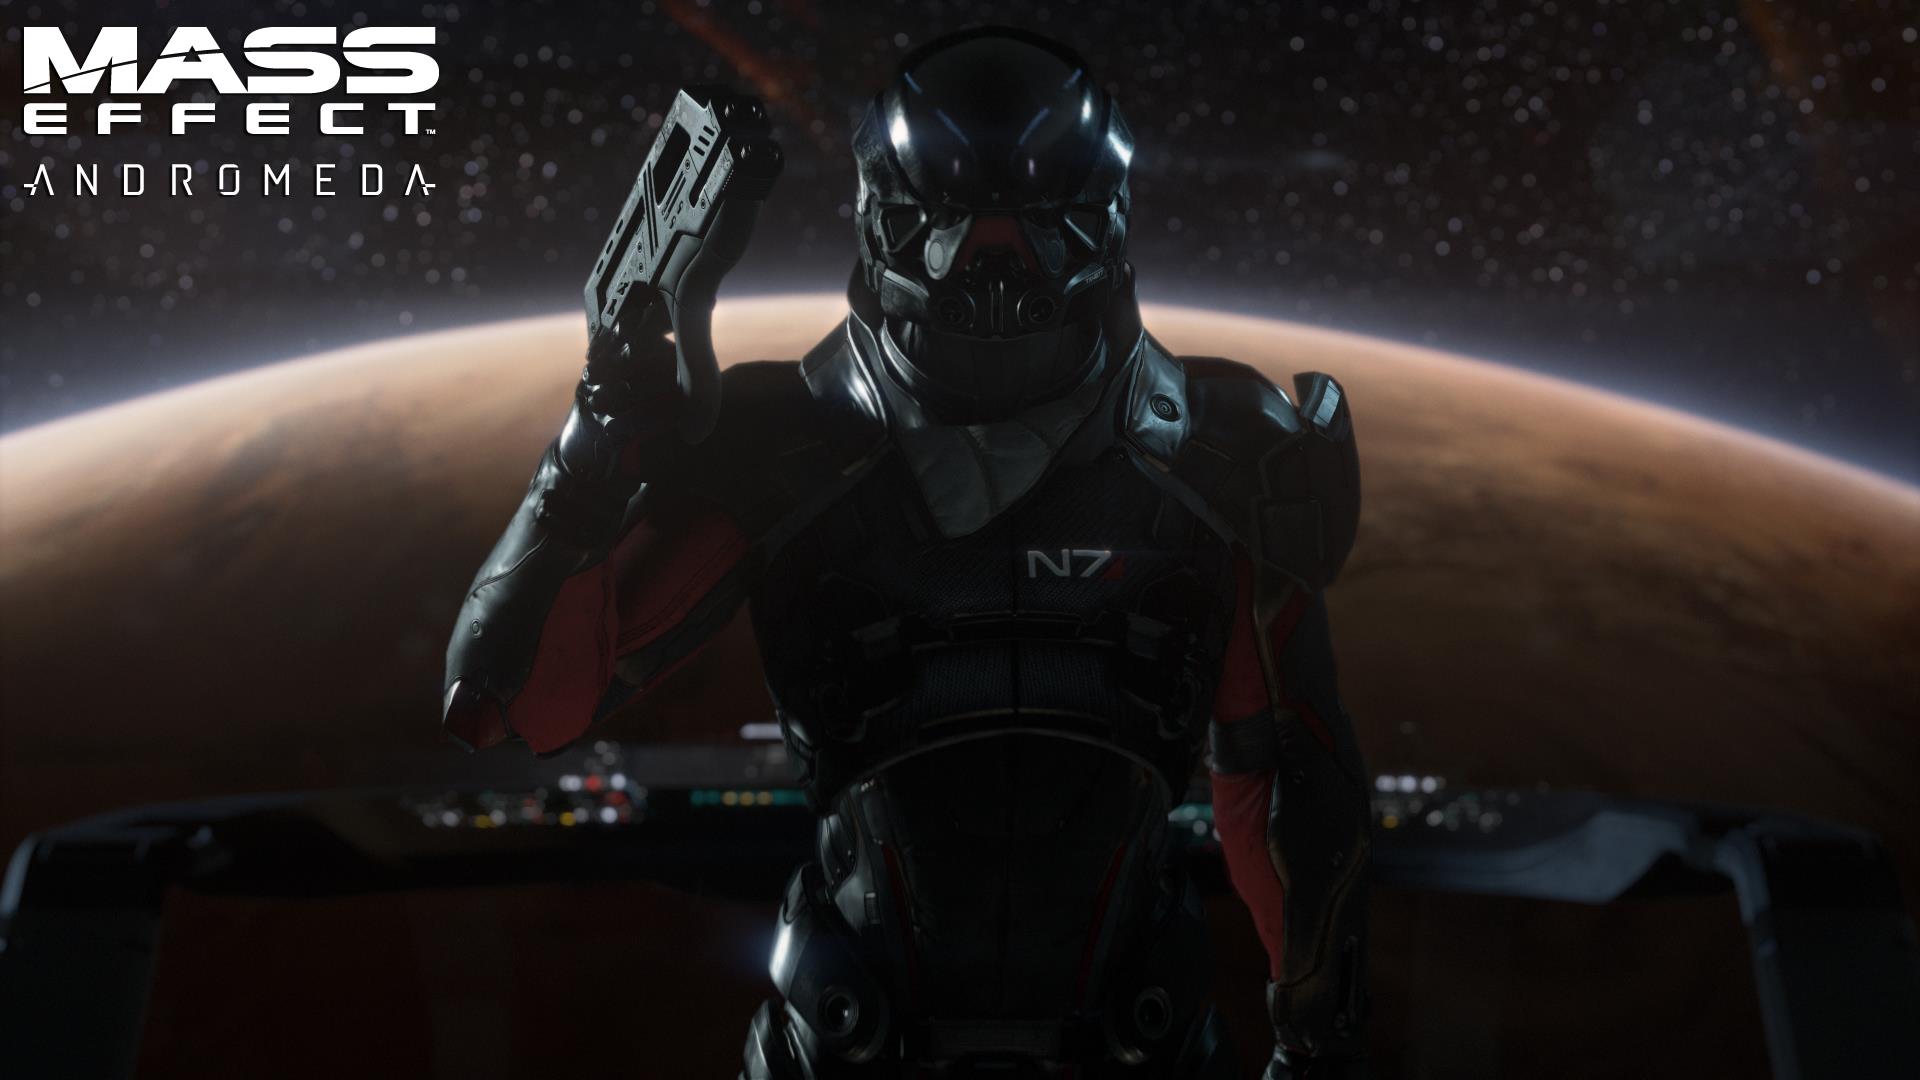 Mass Effect Andromeda character creation